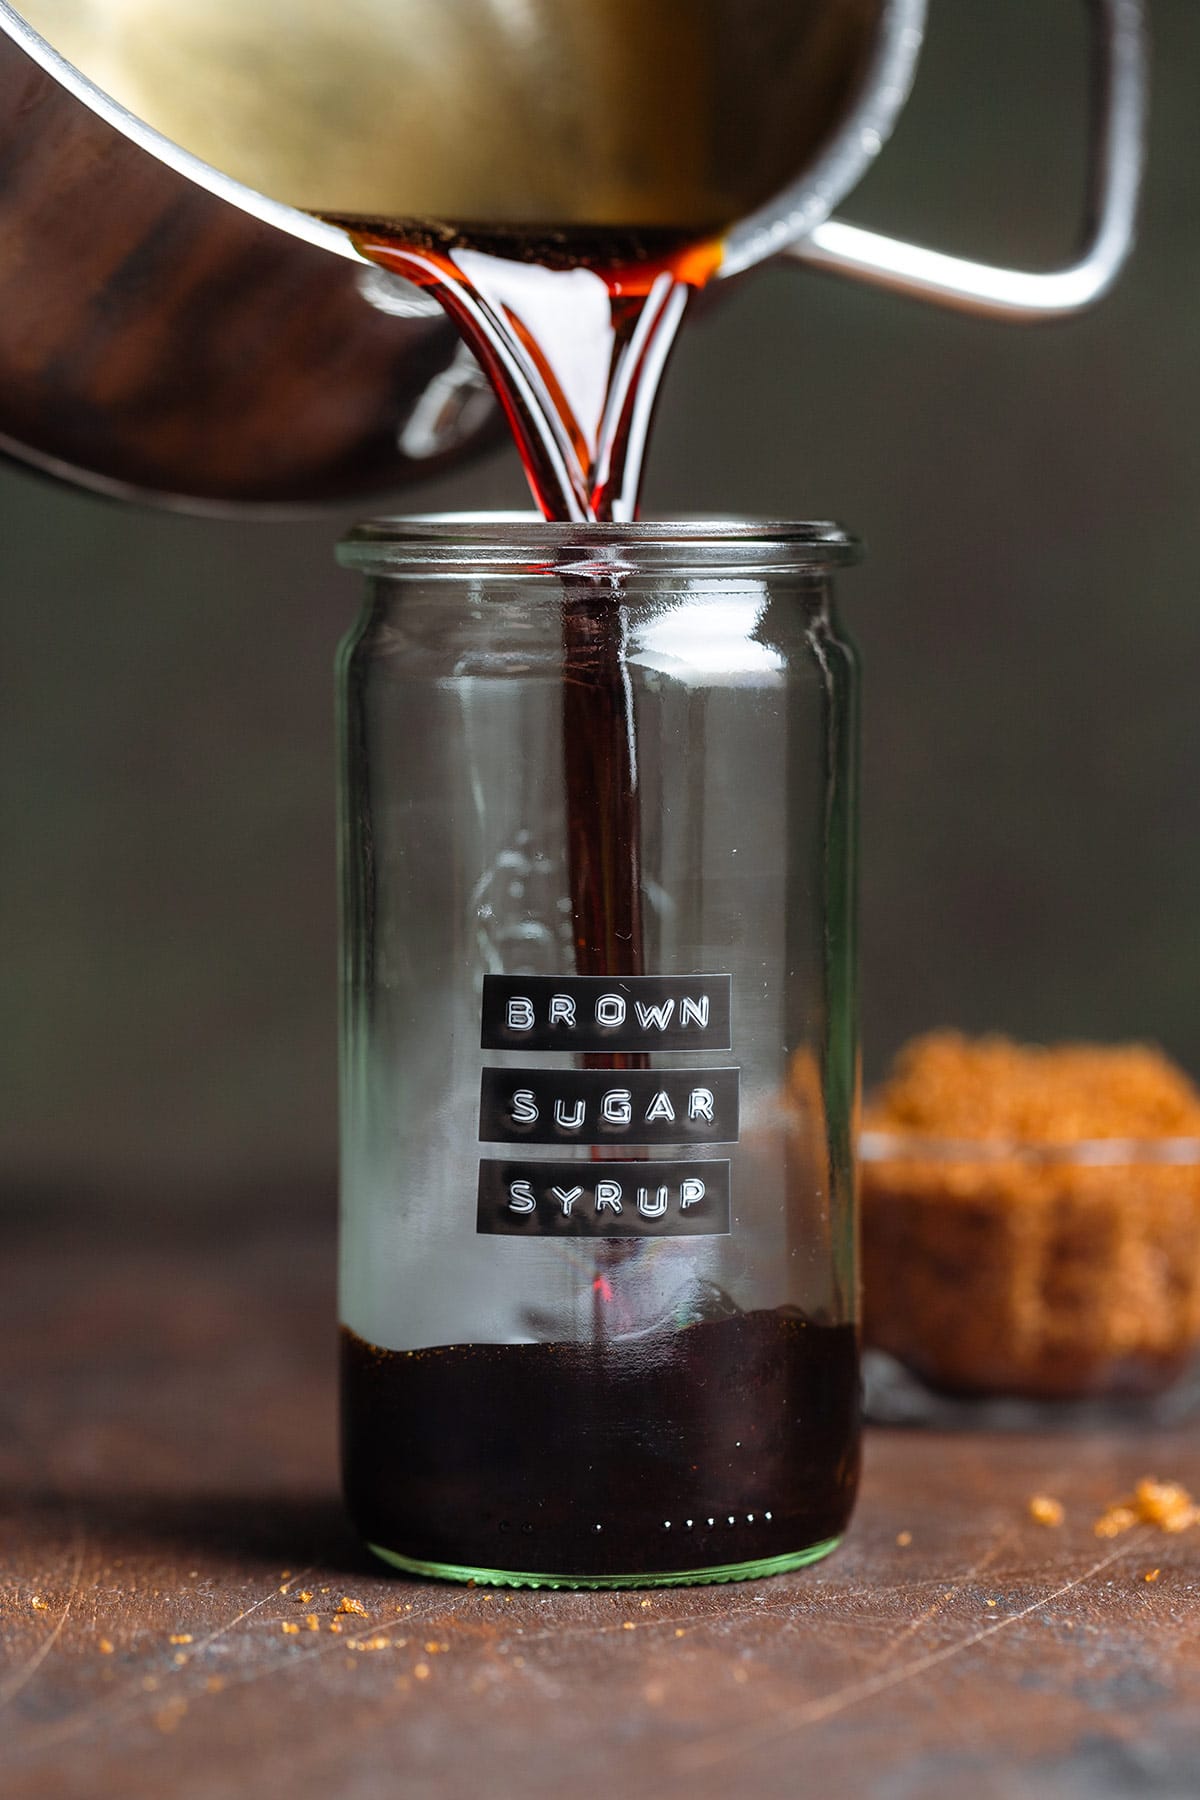 Dark brown sugar syrup being poured into a glass jar.